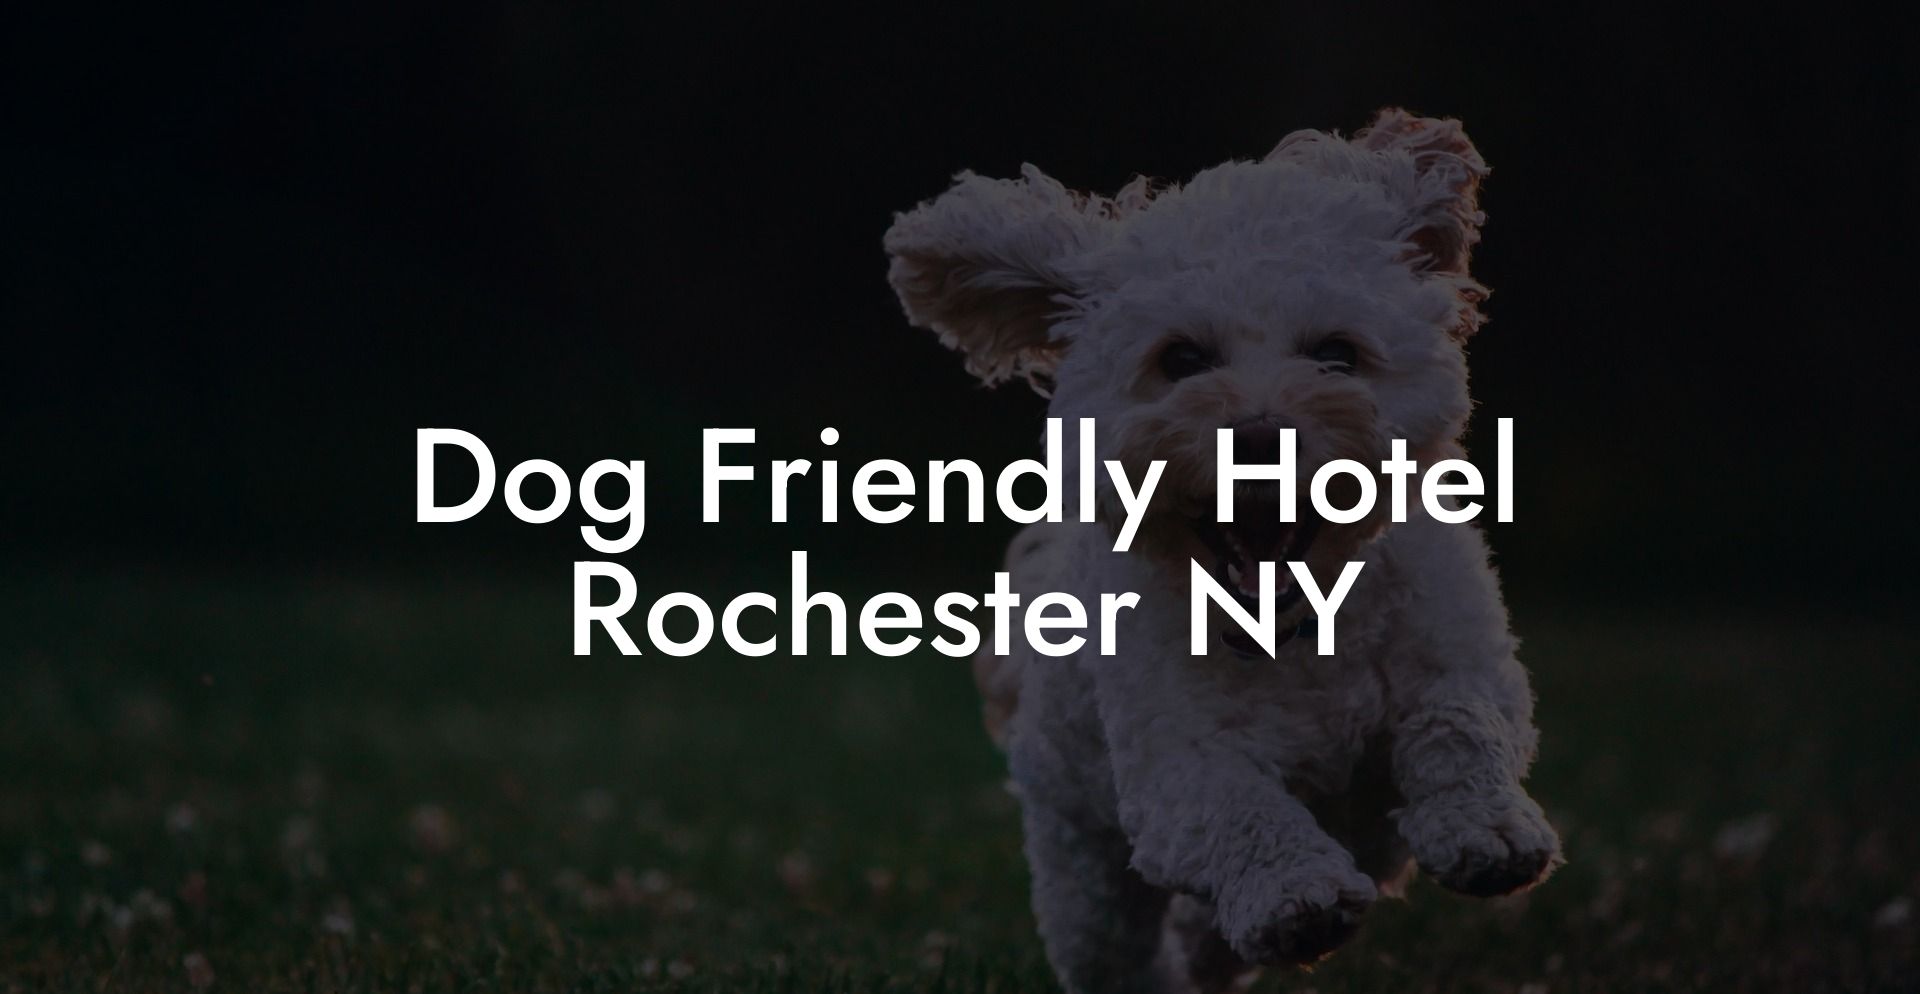 Dog Friendly Hotel Rochester NY